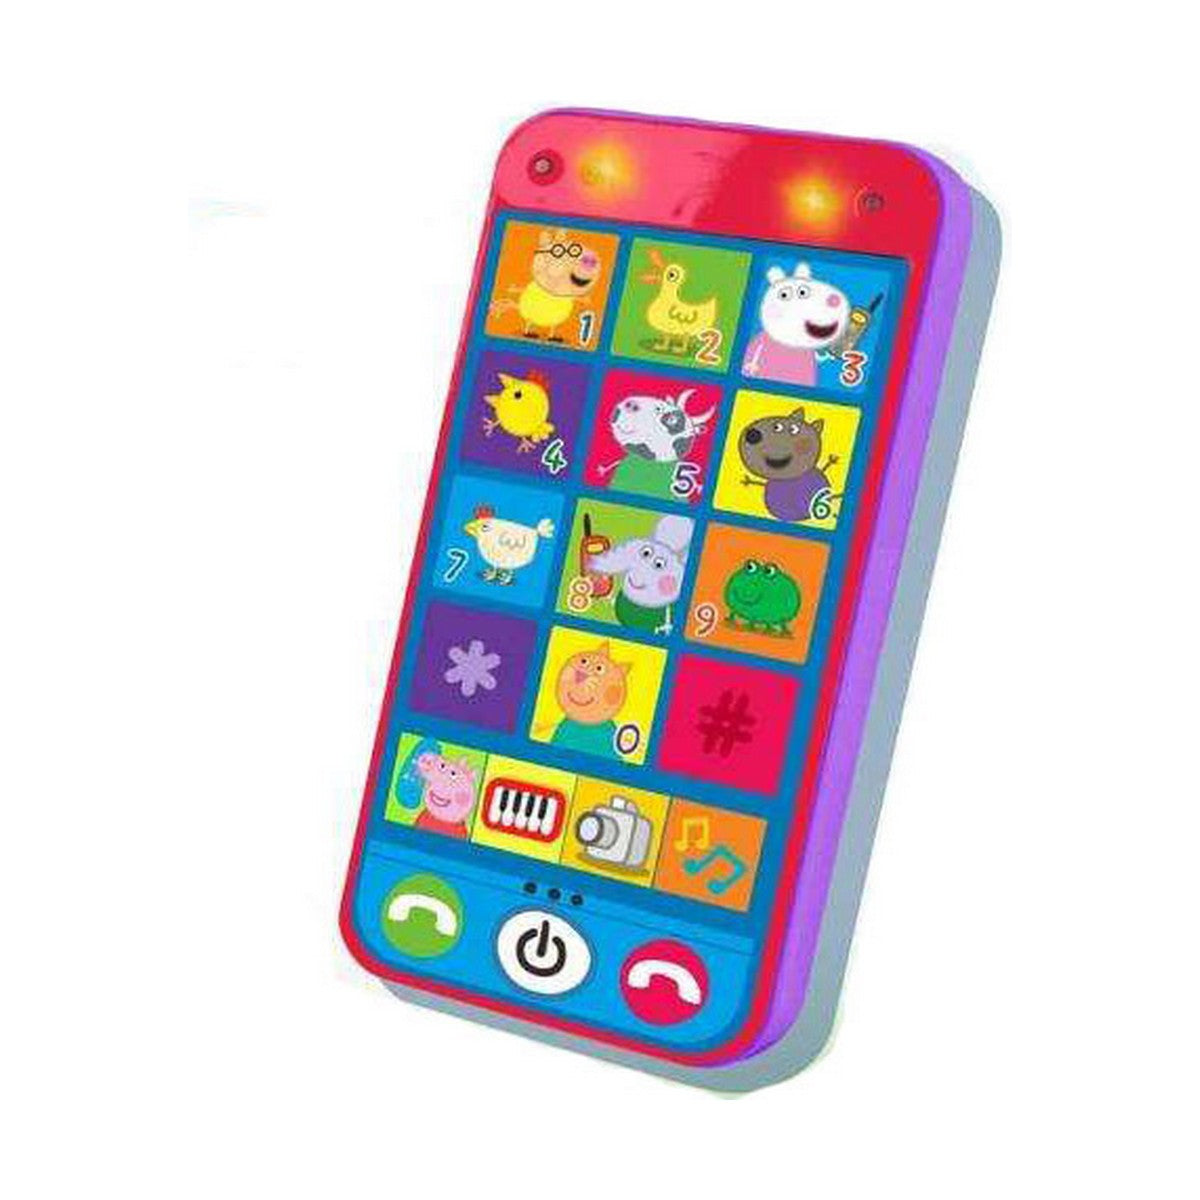 Peppa Pig Spielzeugtelefon 14 x 2 x 7 cm Kind